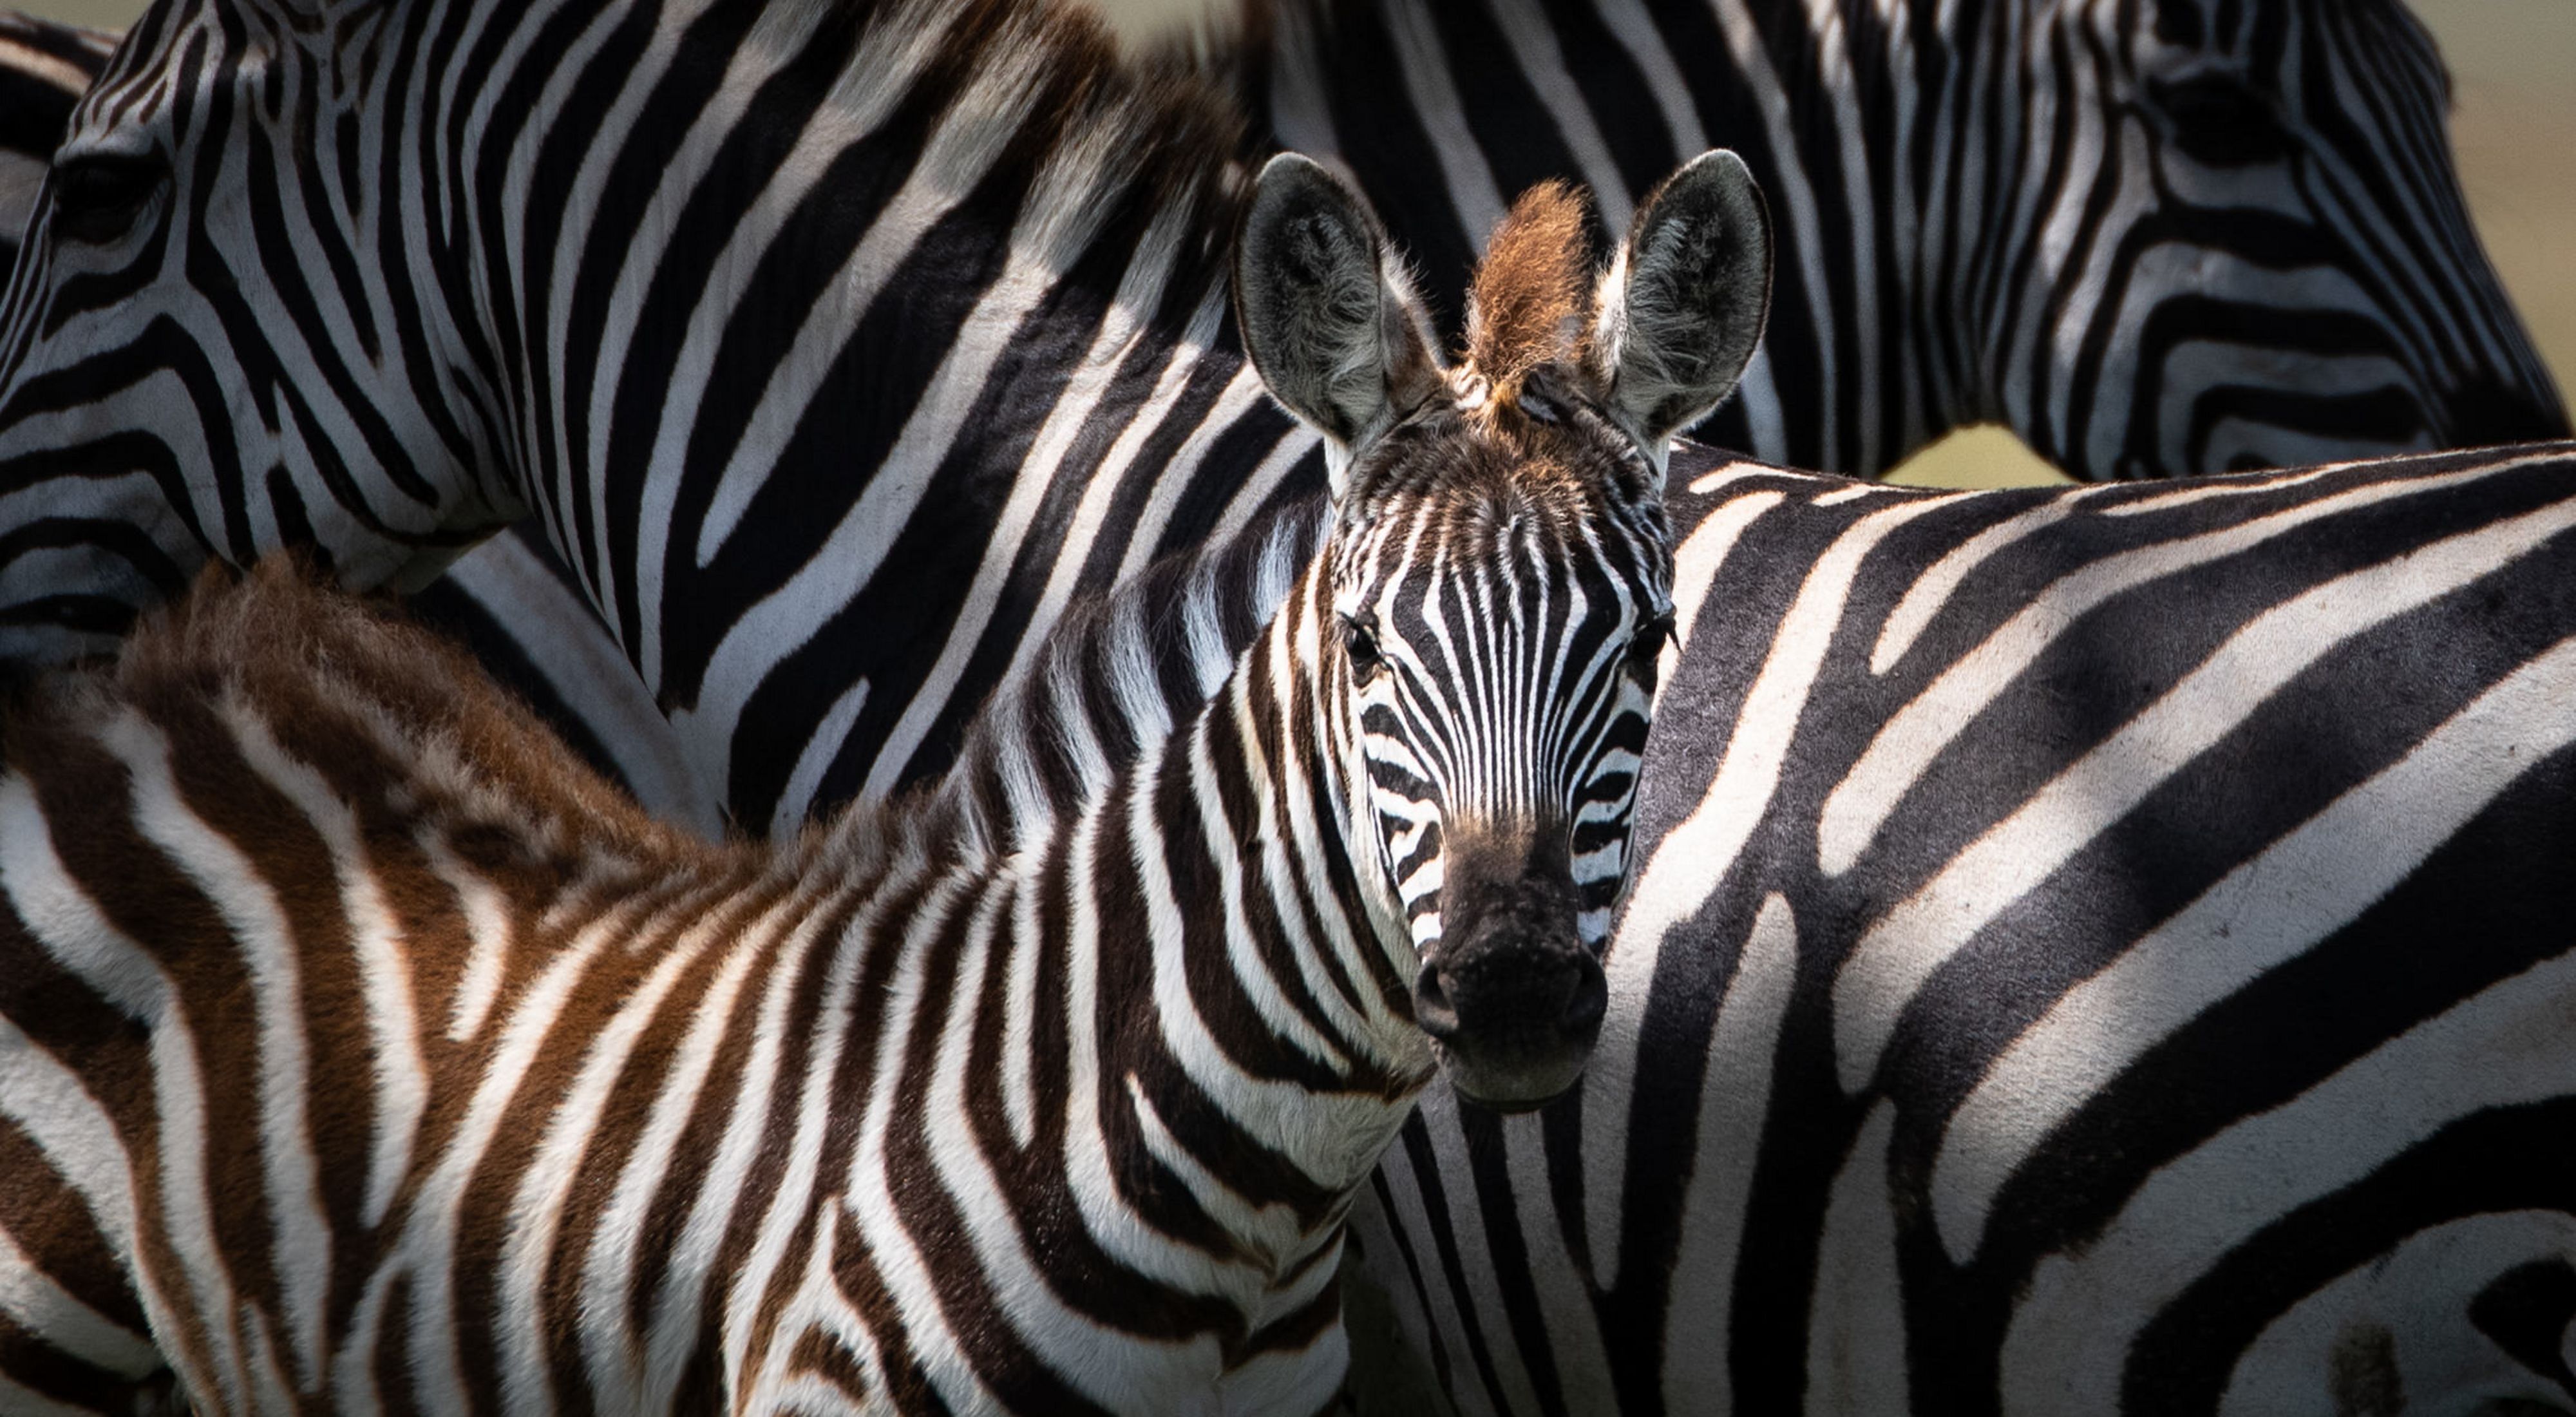 Zebra in the Maasai Mara wildlife conservancy areas in southern Kenya.